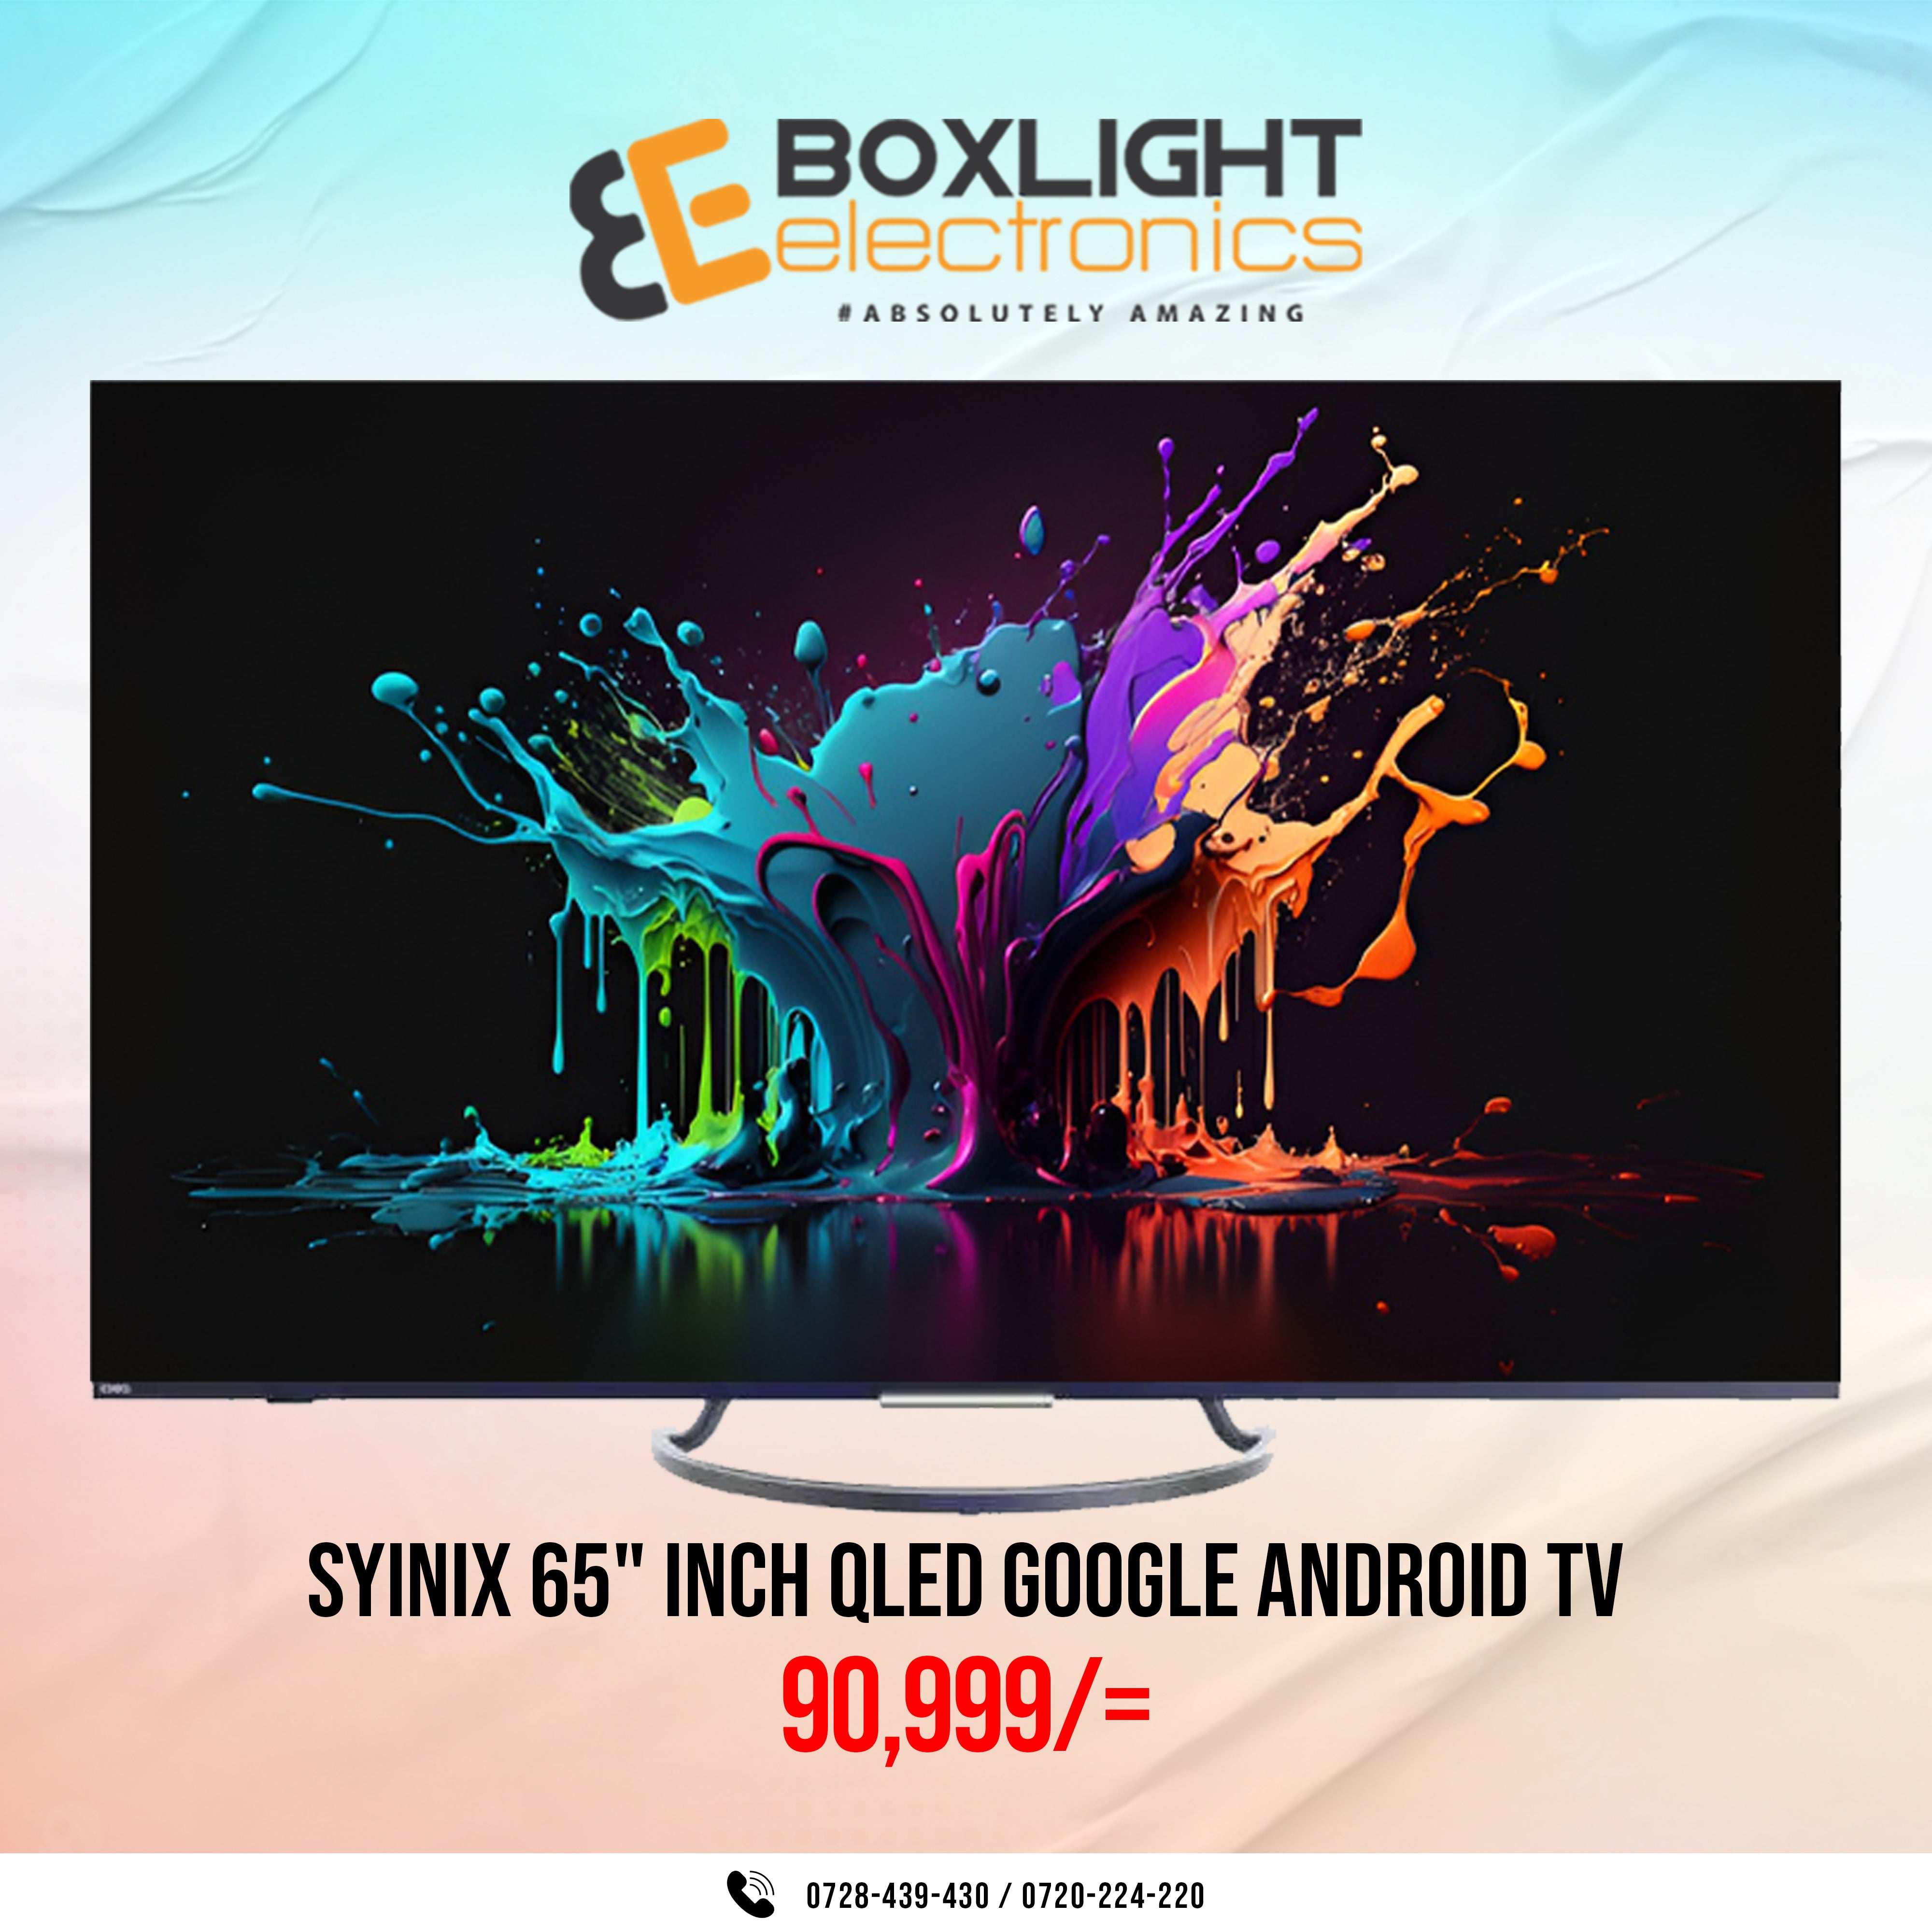 Syinix 65" inch 4K QLED Google Android TV